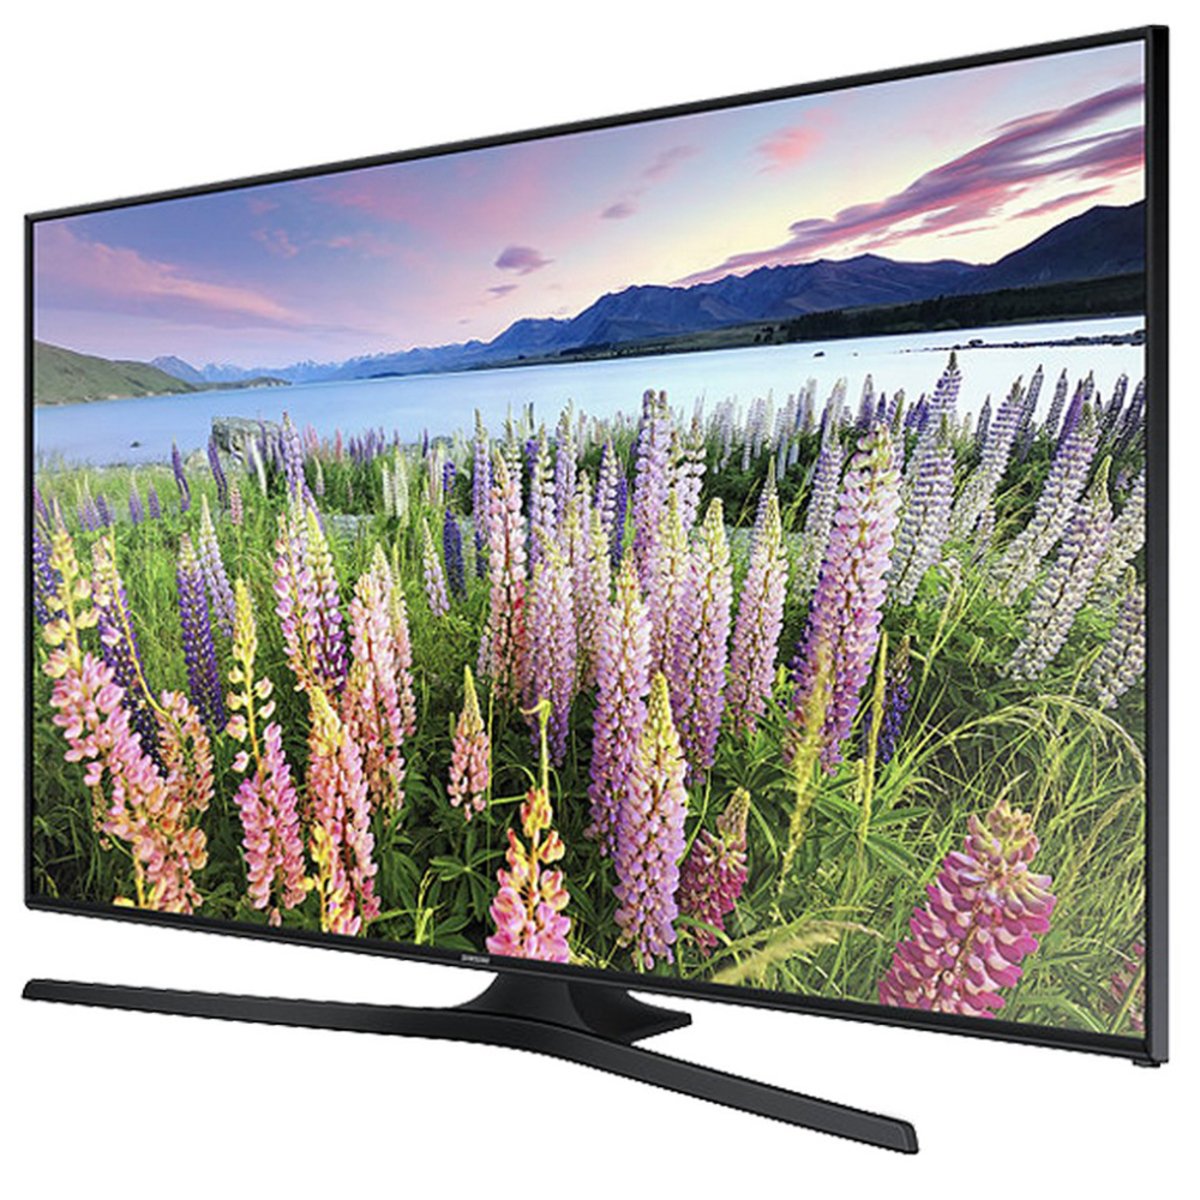 Samsung LED TV UA43J5100 43inch